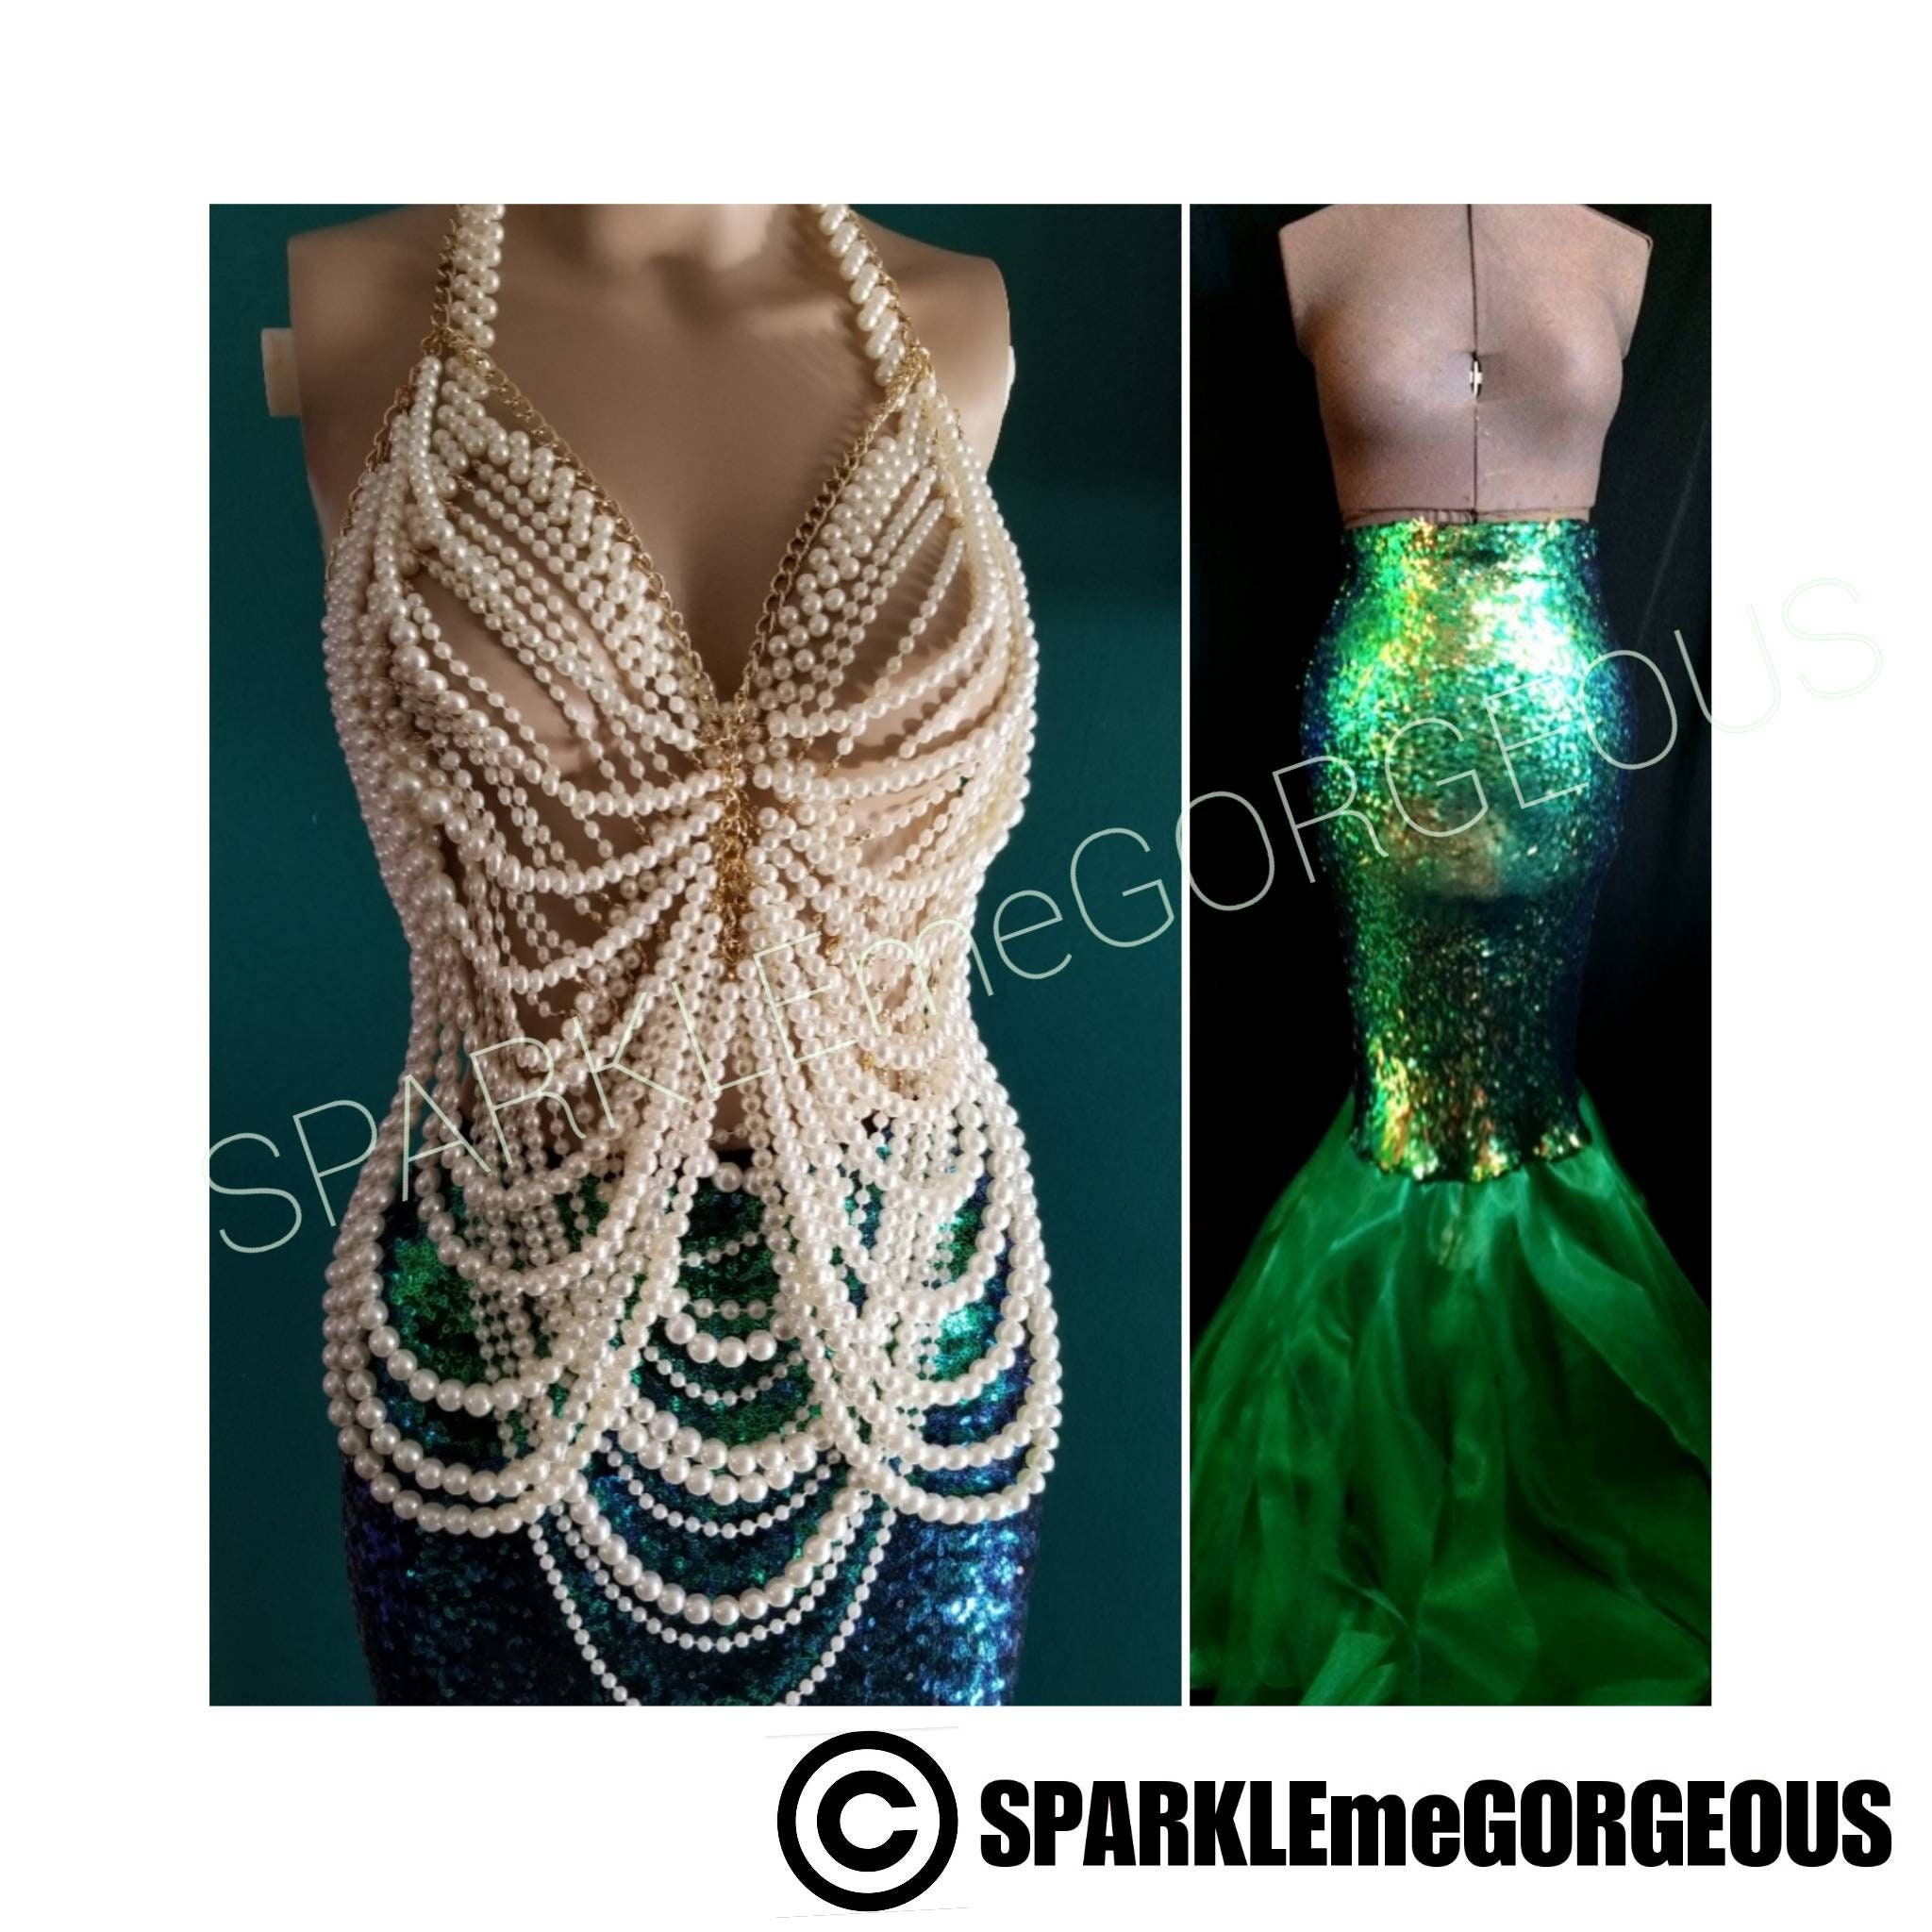 Women Mermaid Costume Pearl Body Chain Top Green Mermaid photo photo